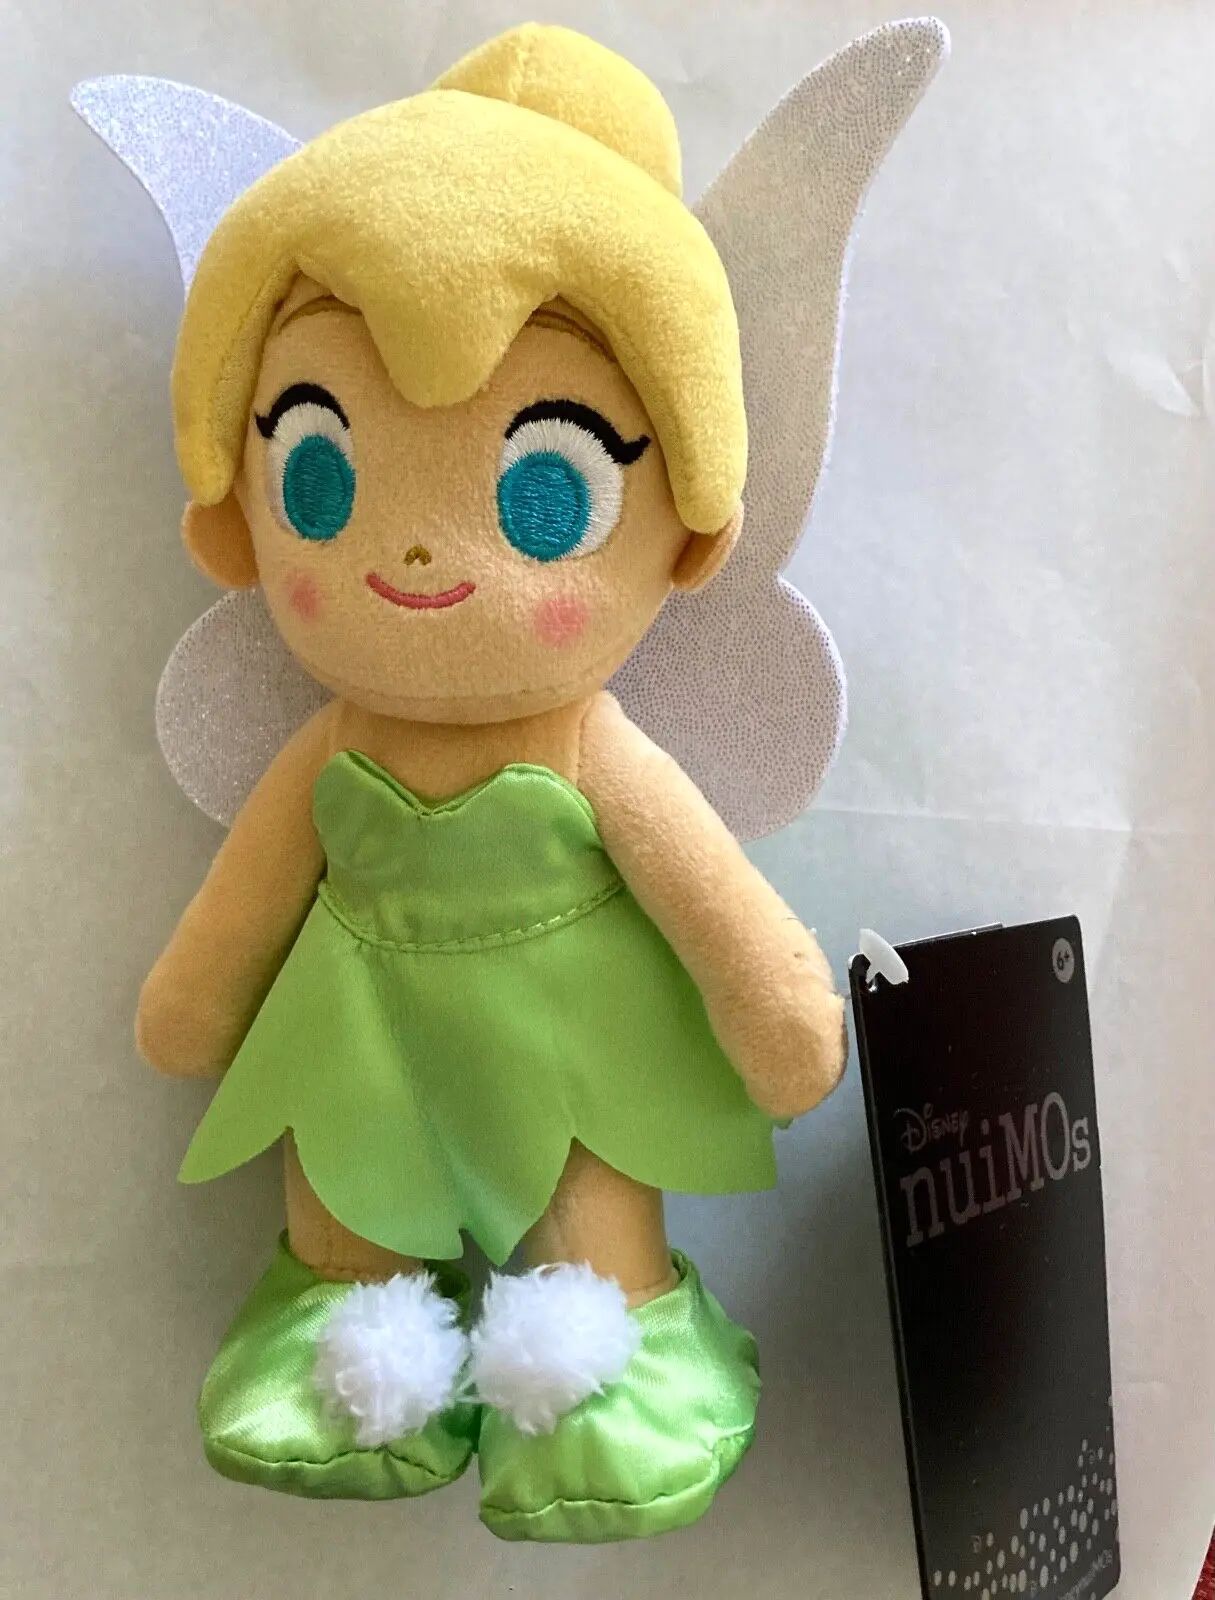 BNWT Disney nuiMOs Tinker Bell Plush Toy 6 3/4"  | eBay | eBay US